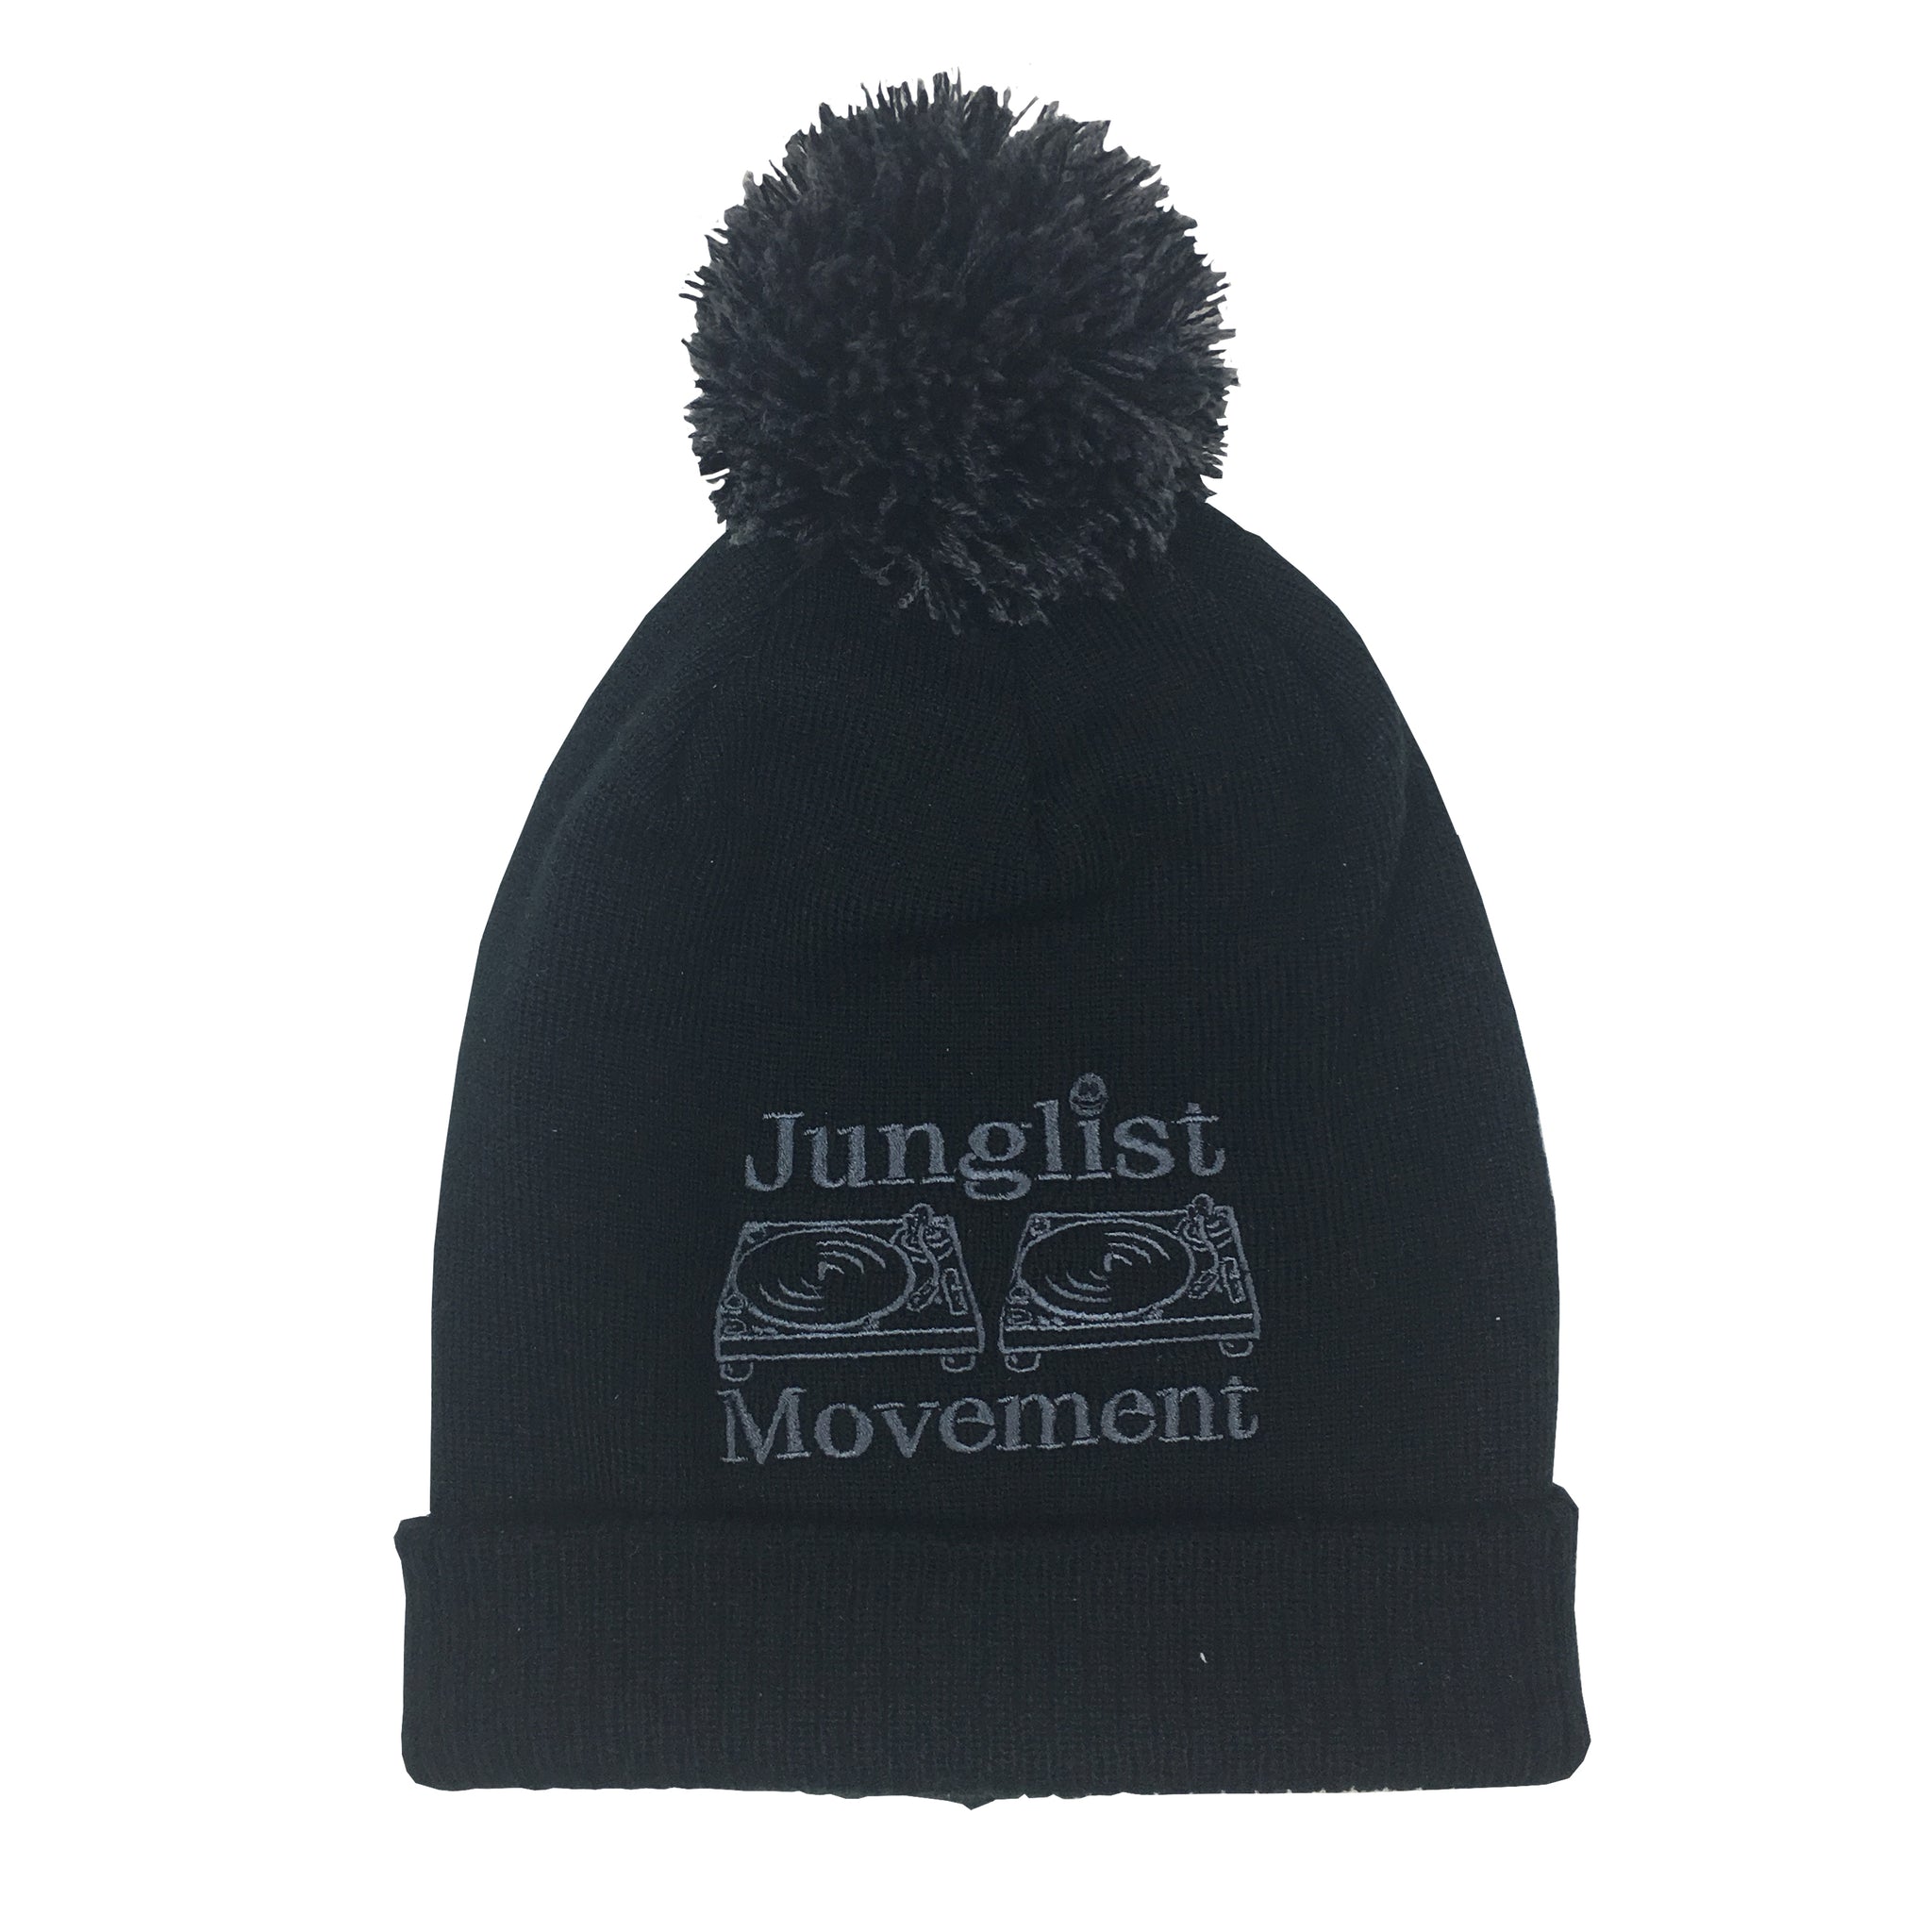 A.S. Embriodered Junglist Movement Snowstar Beanie Hat (Black)